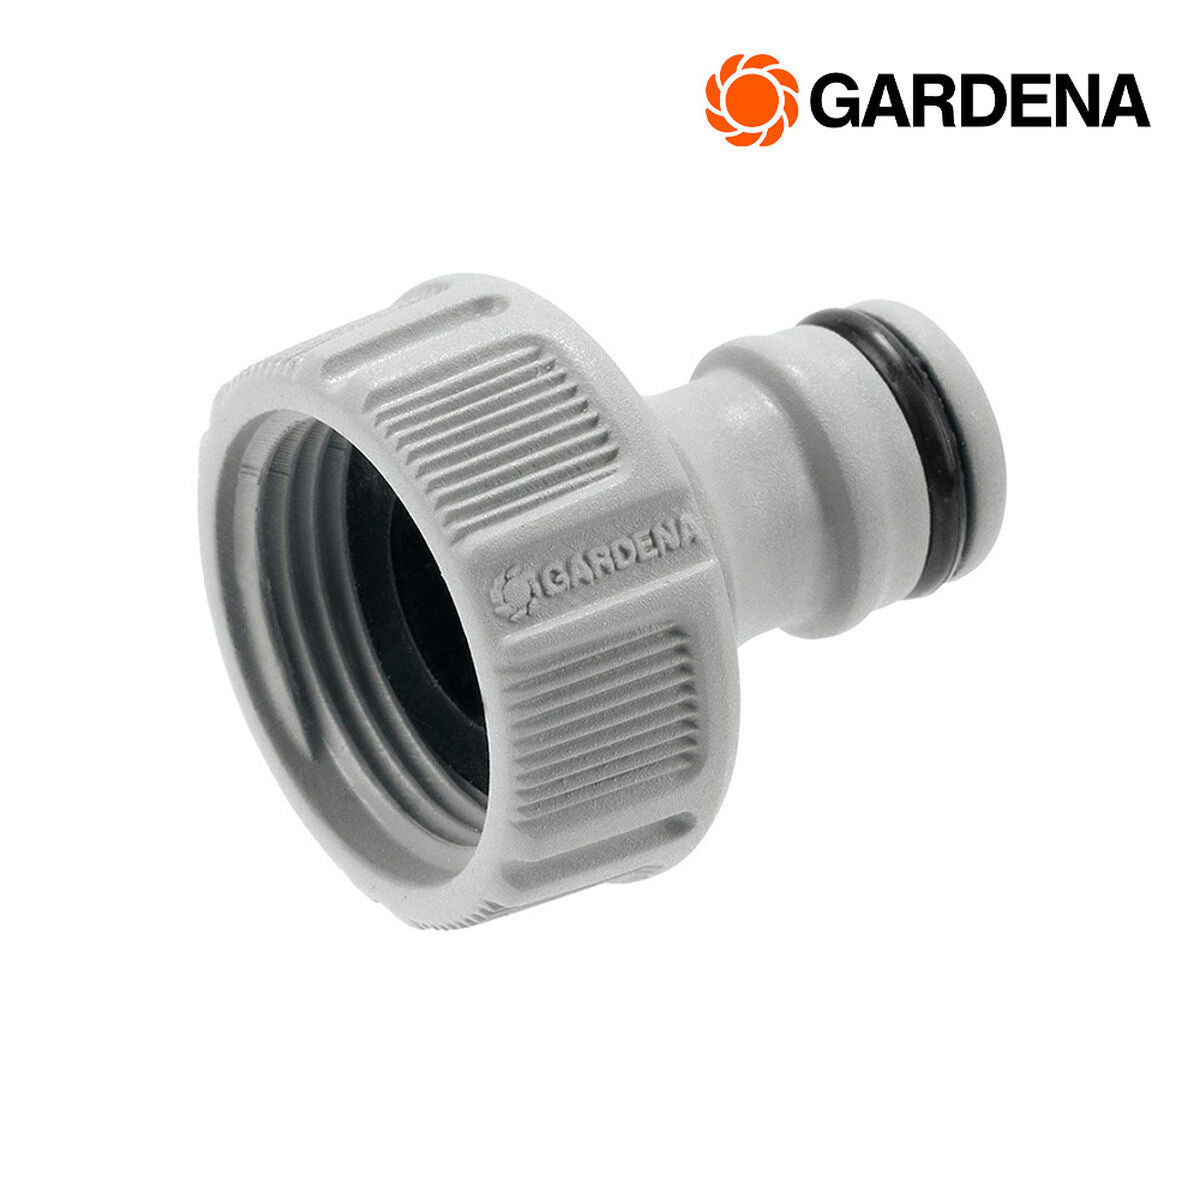 Hose Gardena 18221-20 Adapter Male Plug 3/4 "